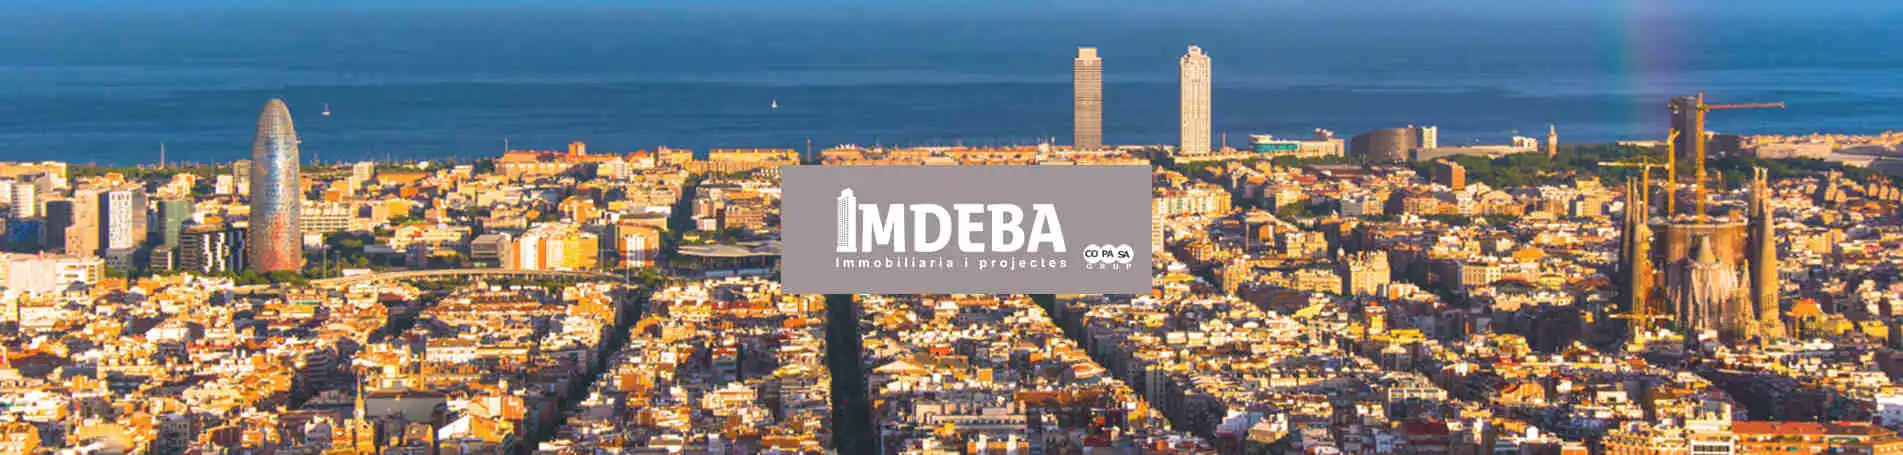 Marketing  Outsourcing  para Imdeba